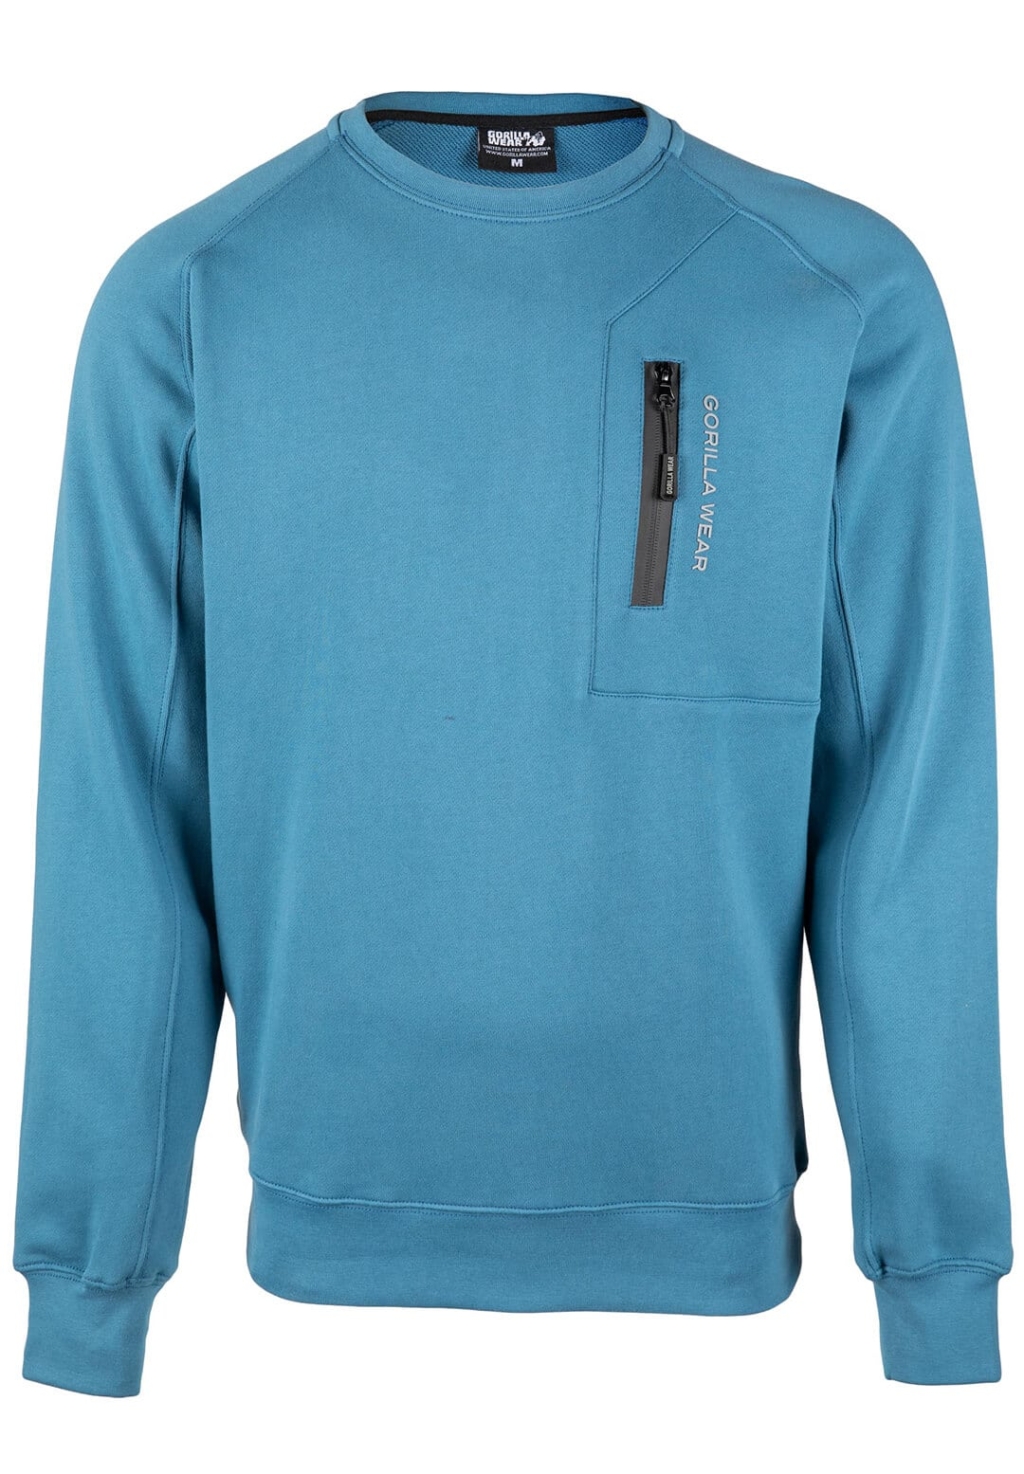 90717300 newark sweater blue 01 1080